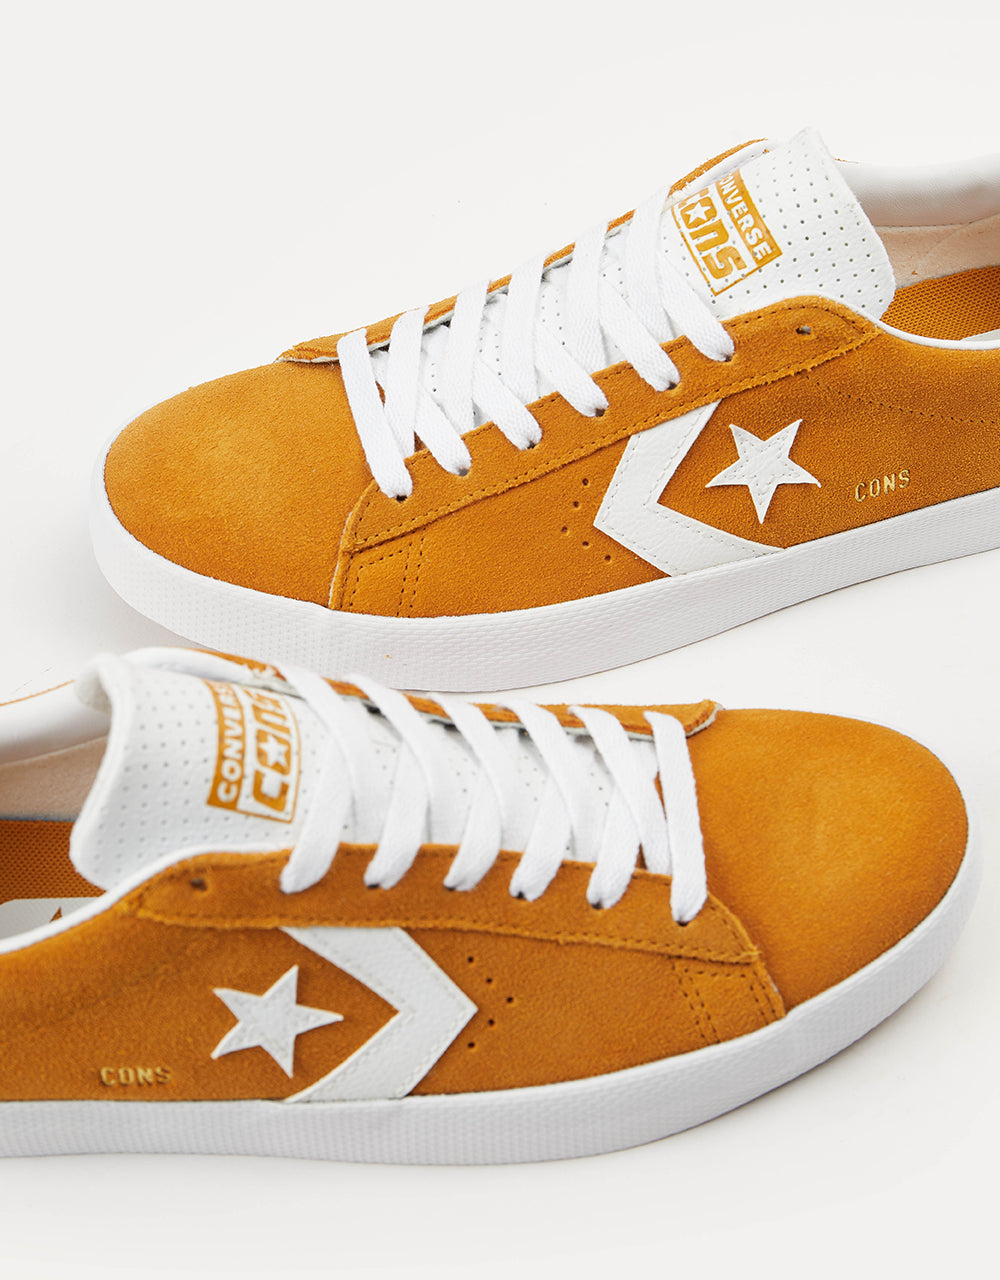 Converse PL Vulc Pro Ox Summer Skate Shoes - Golden Sundial/White/White